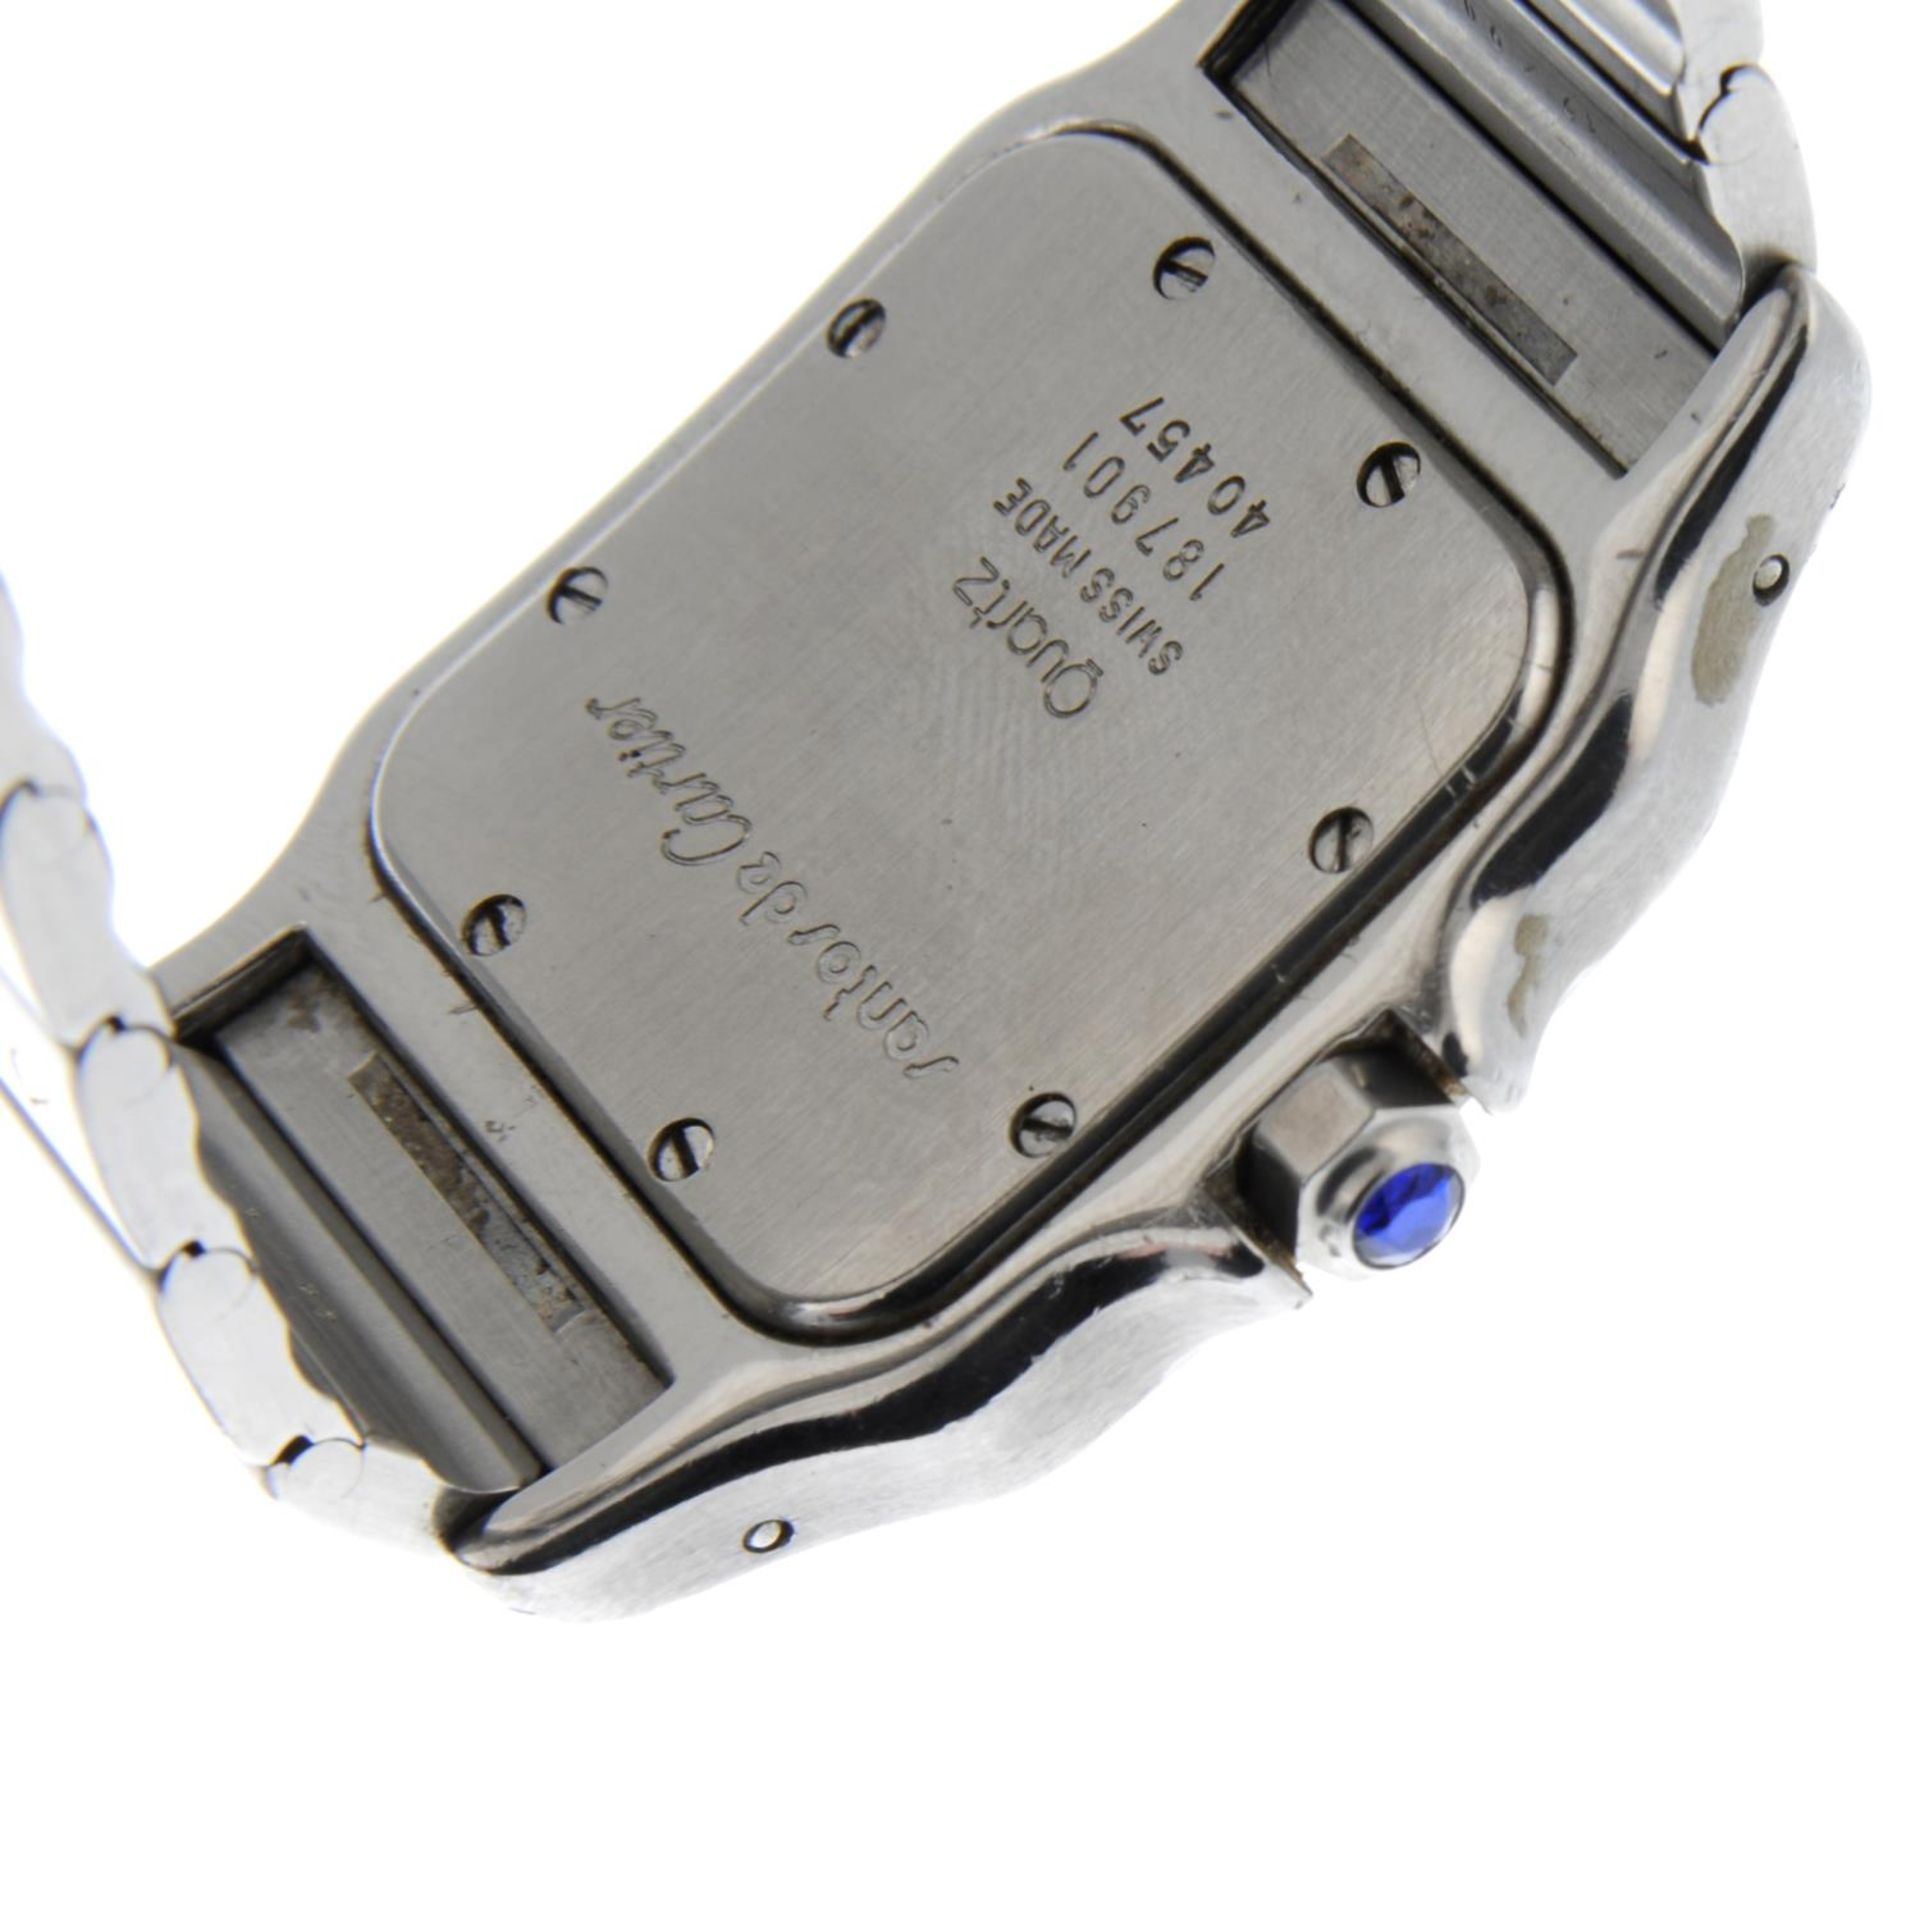 CARTIER - a Santos bracelet watch. - Image 2 of 4